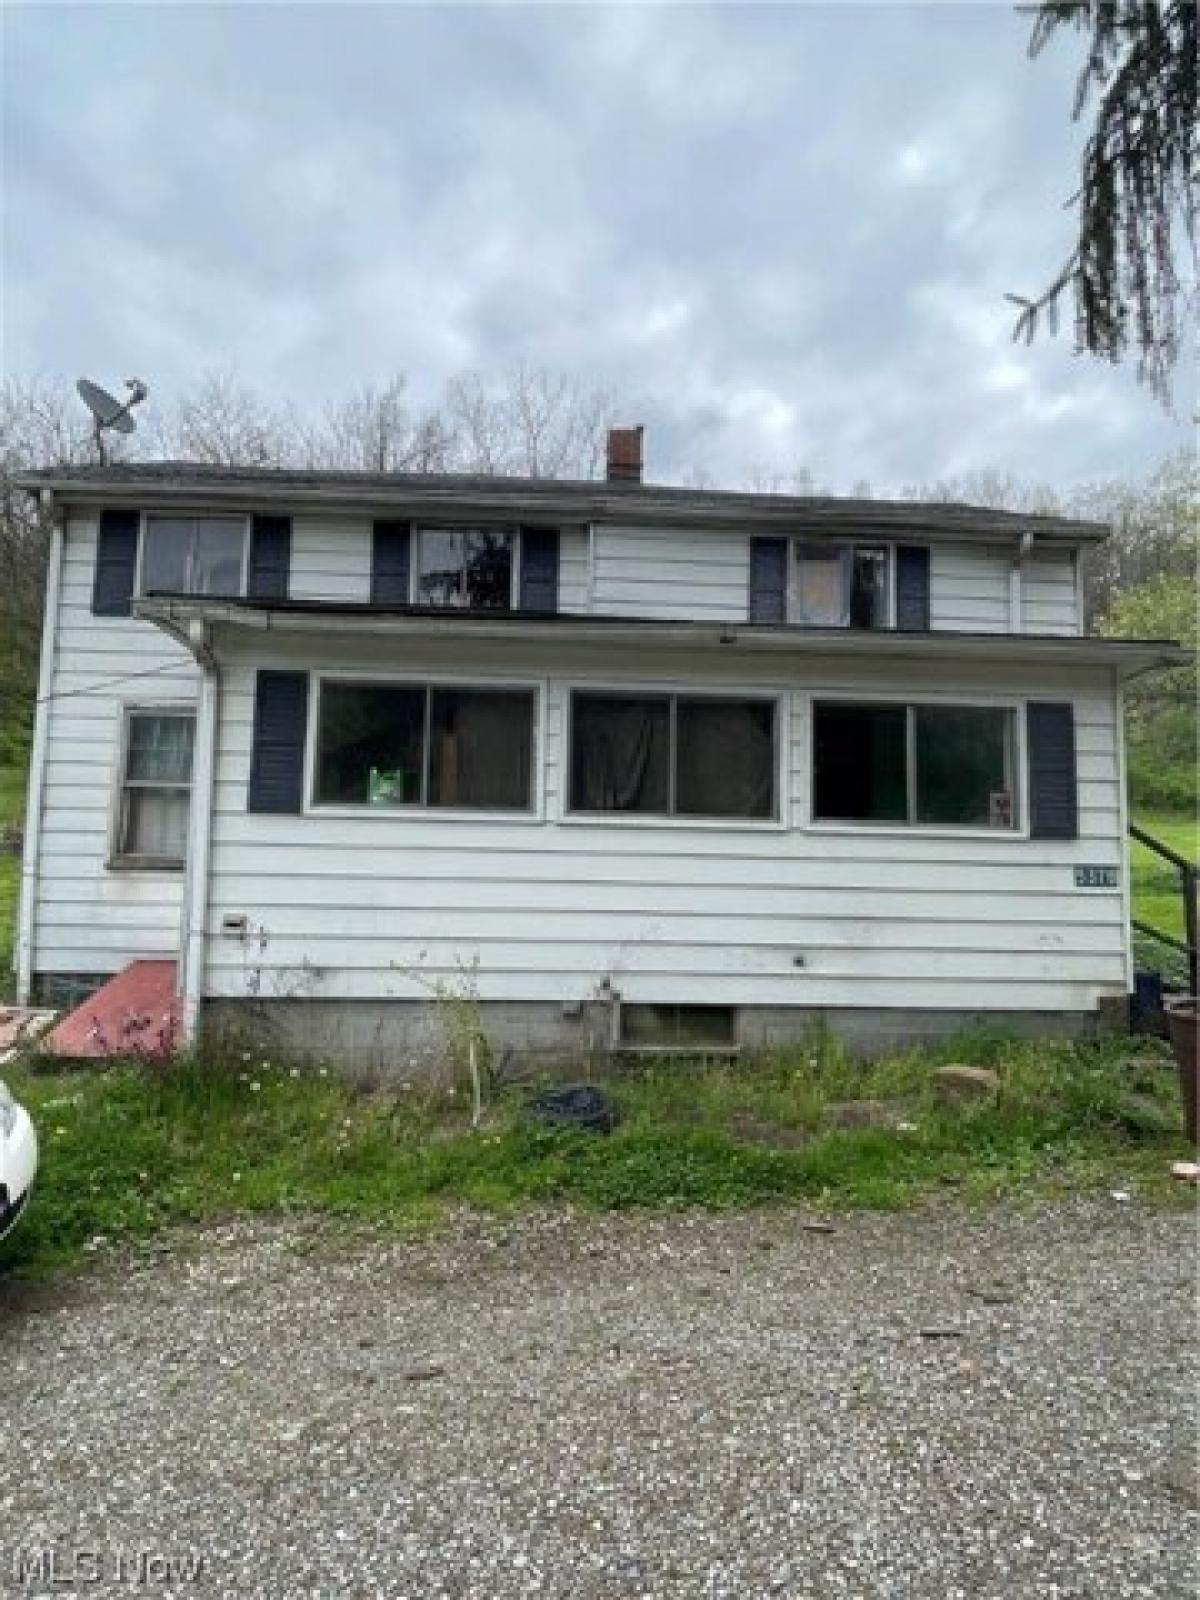 Picture of Home For Sale in Dillonvale, Ohio, United States